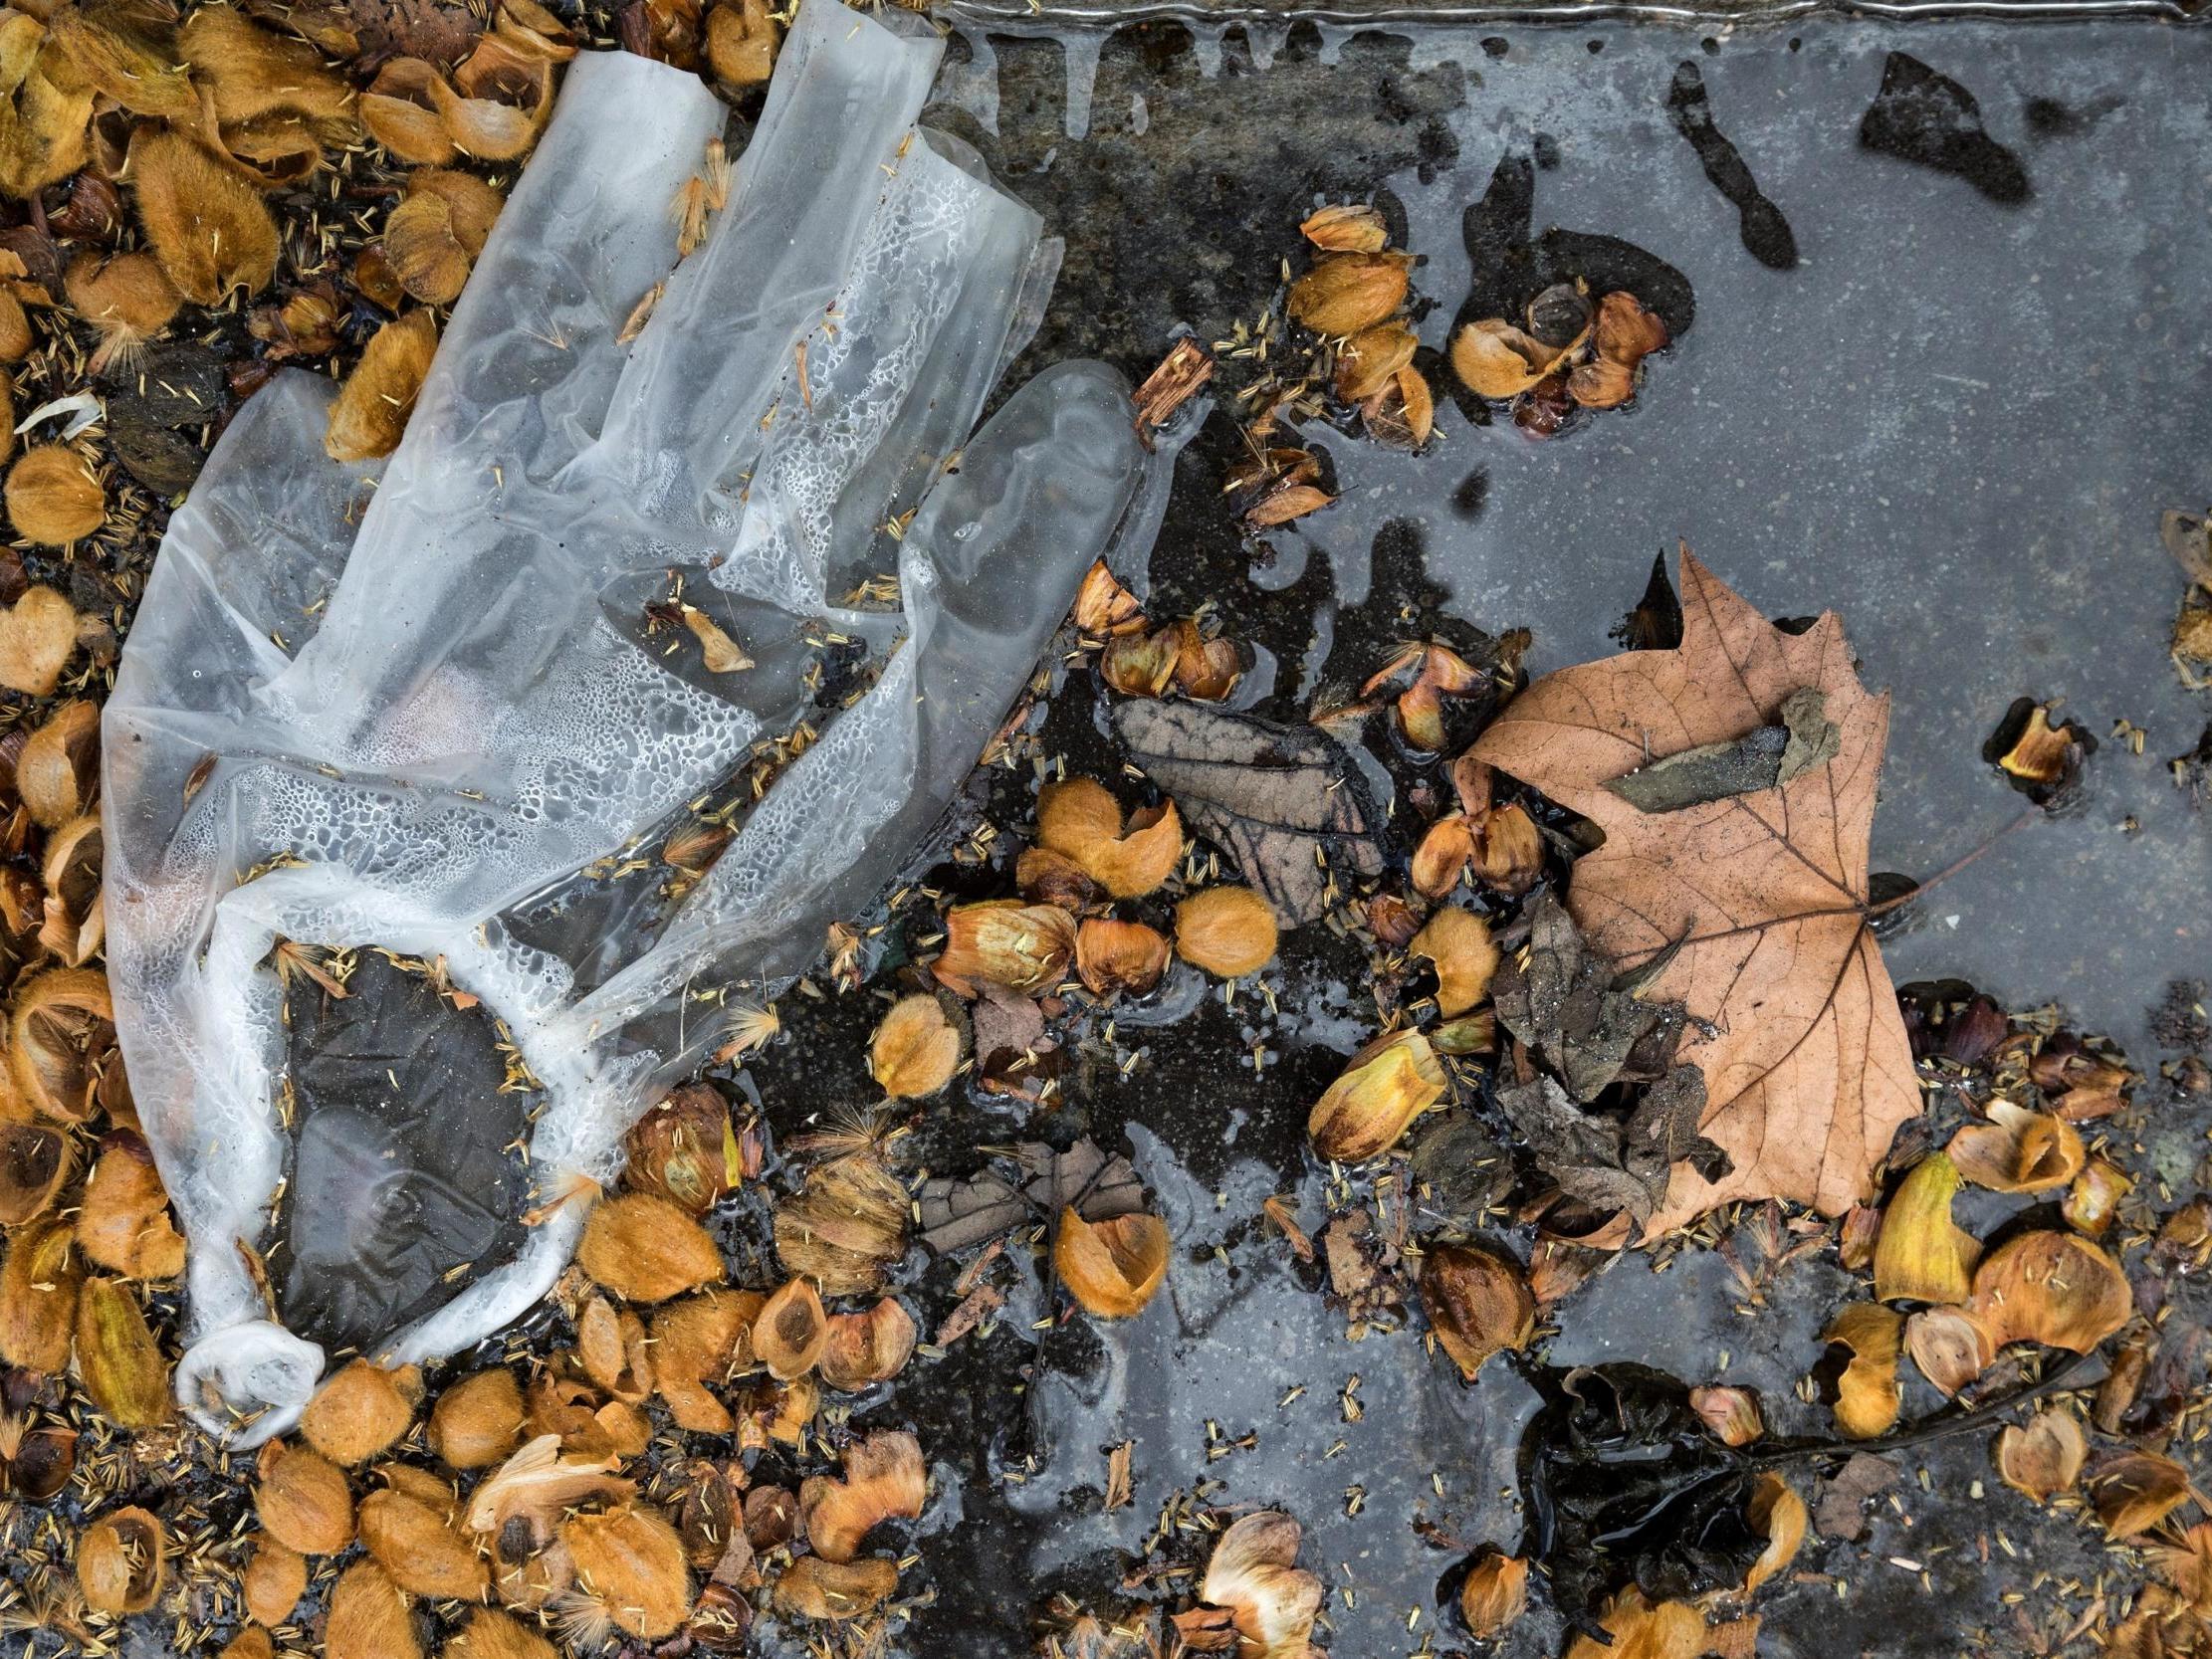 A latex plastic glove litters the street in Paris towards the start of its national lockdown over coronavirus